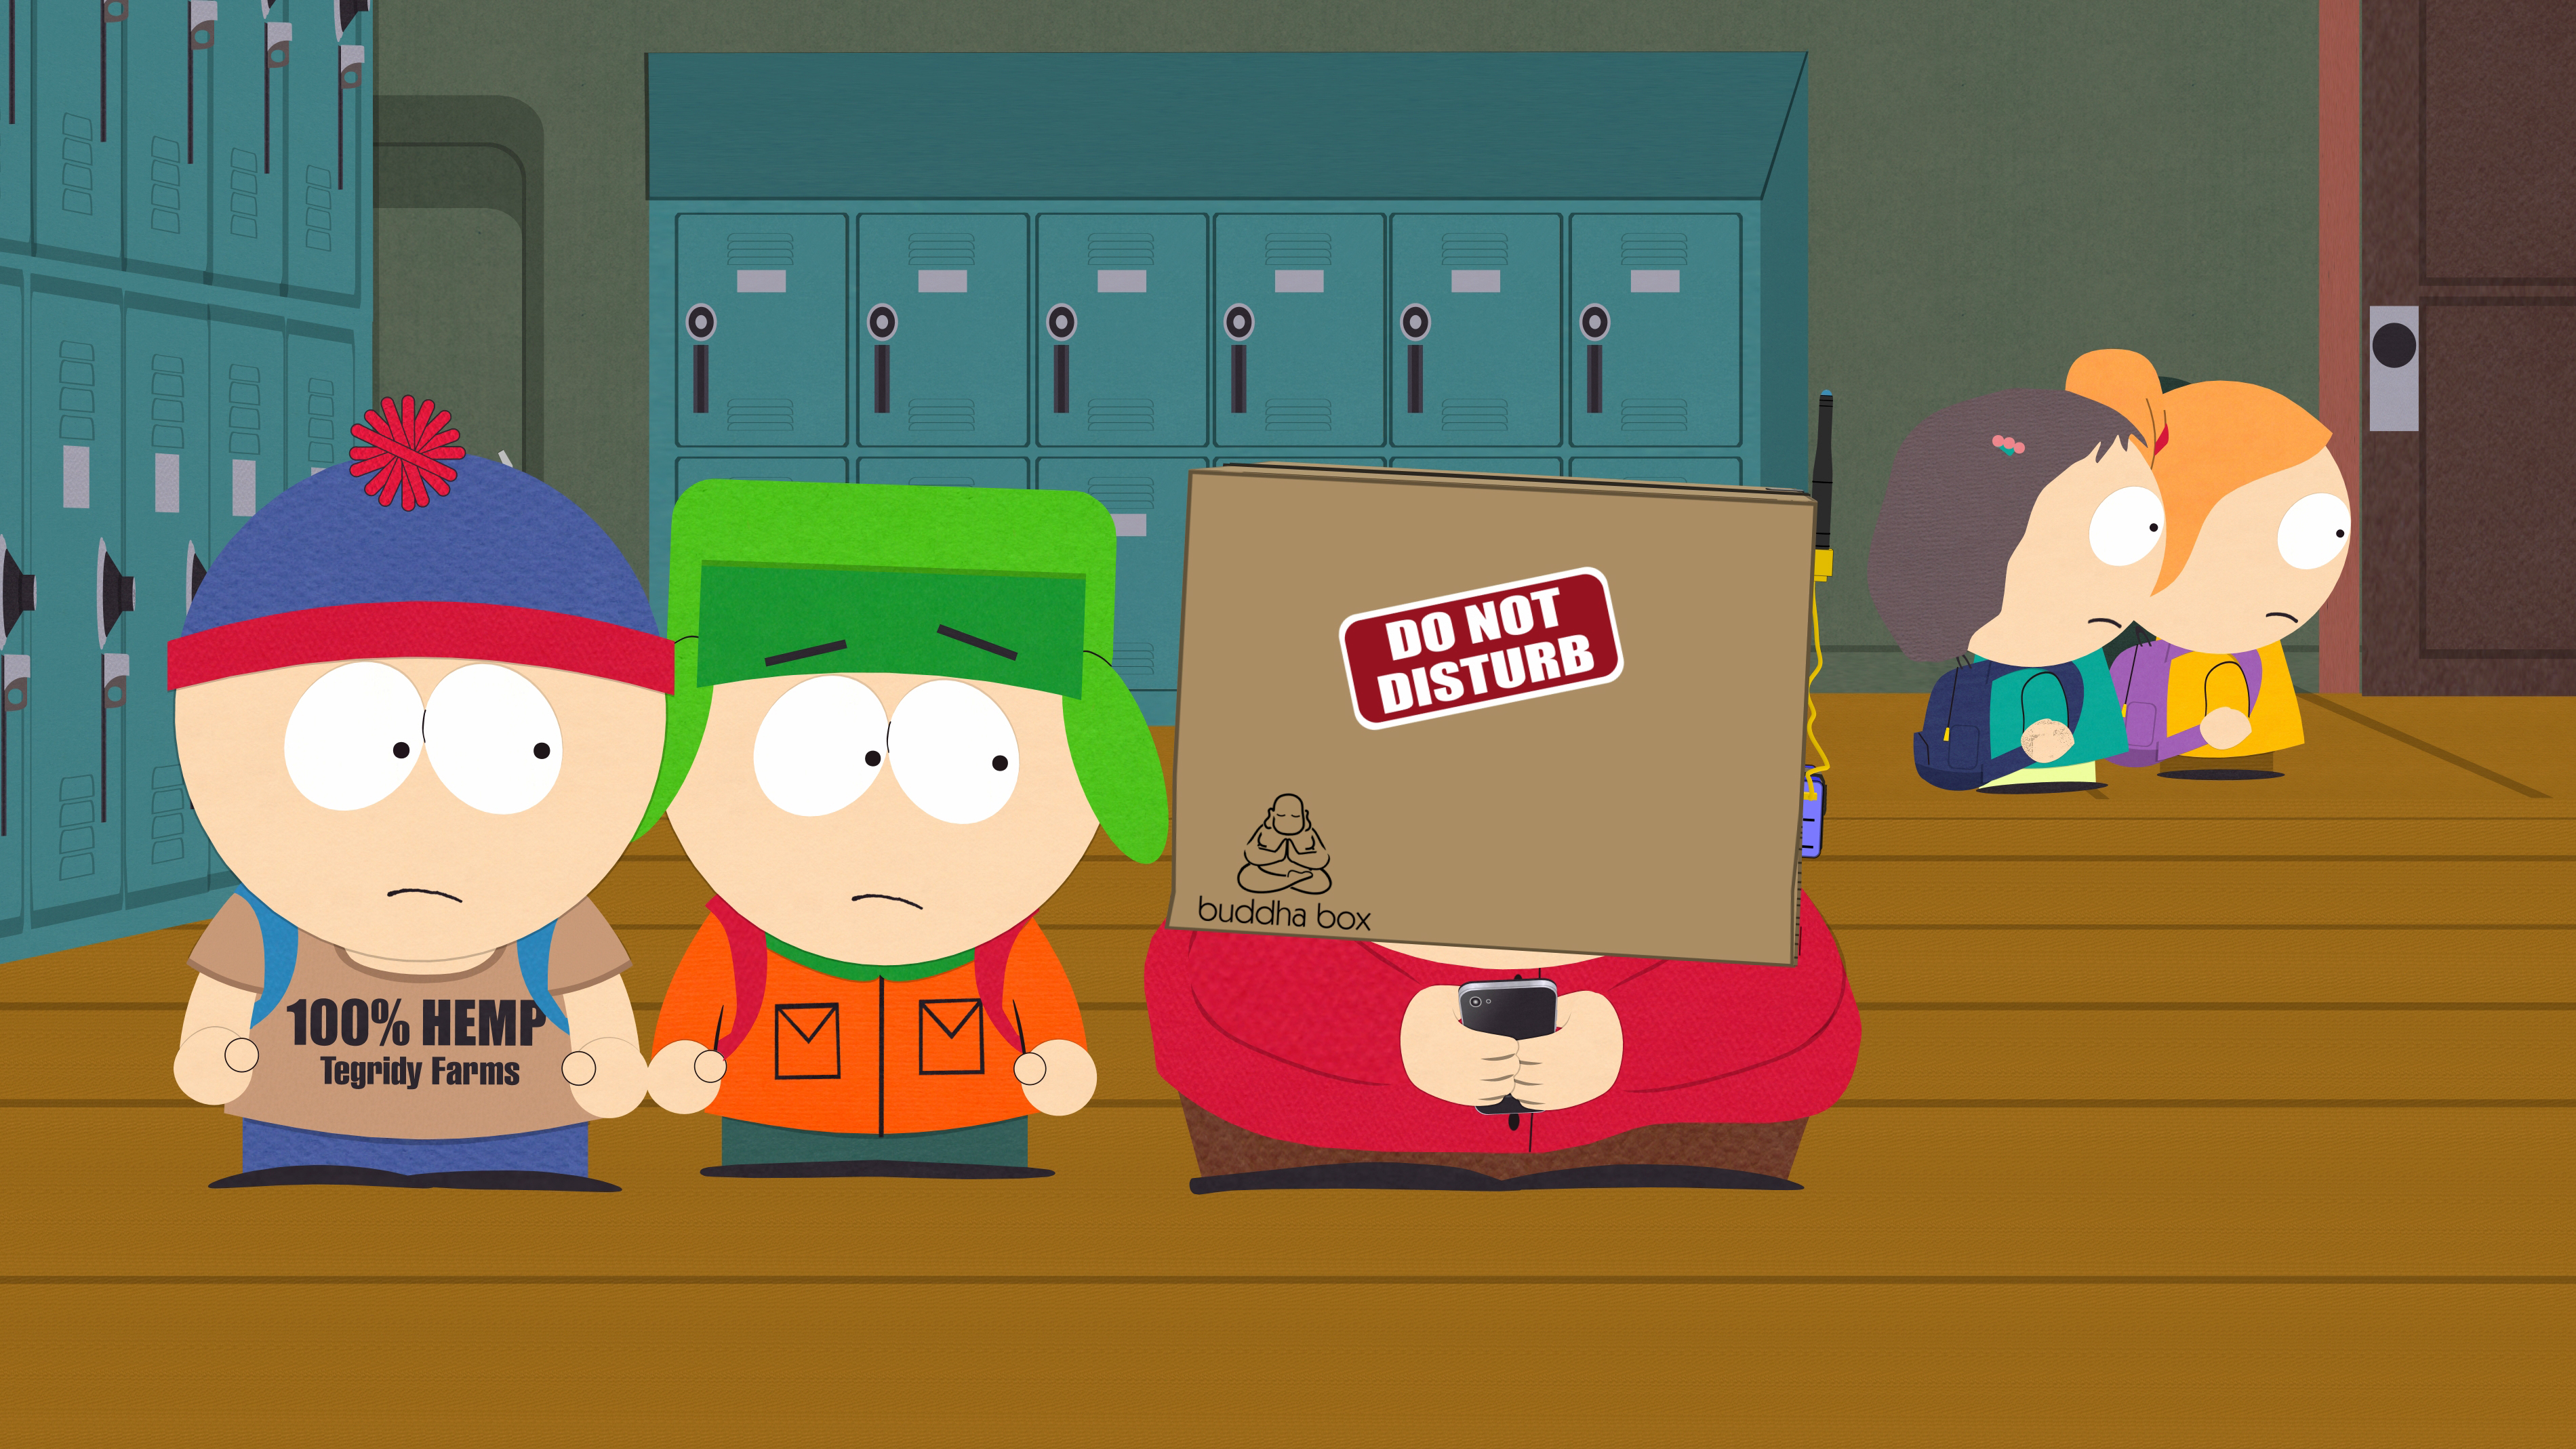 Episode 2208 “Buddah Box” Press Release - South Park